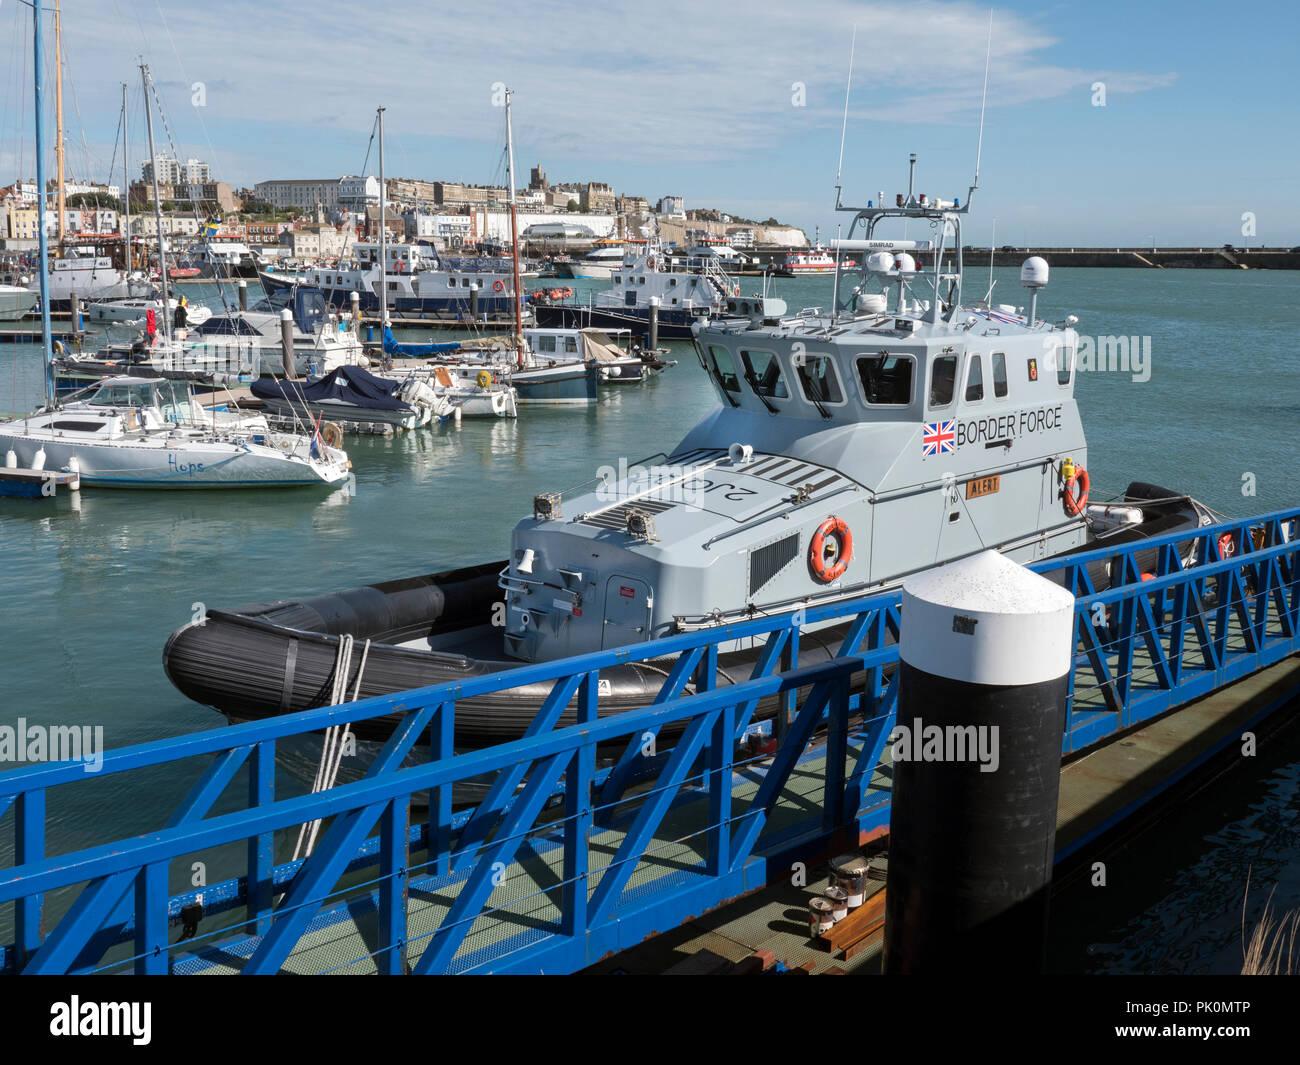 UK Border vigore cutter in Ramsgate Royal Harbour Kent REGNO UNITO Foto Stock